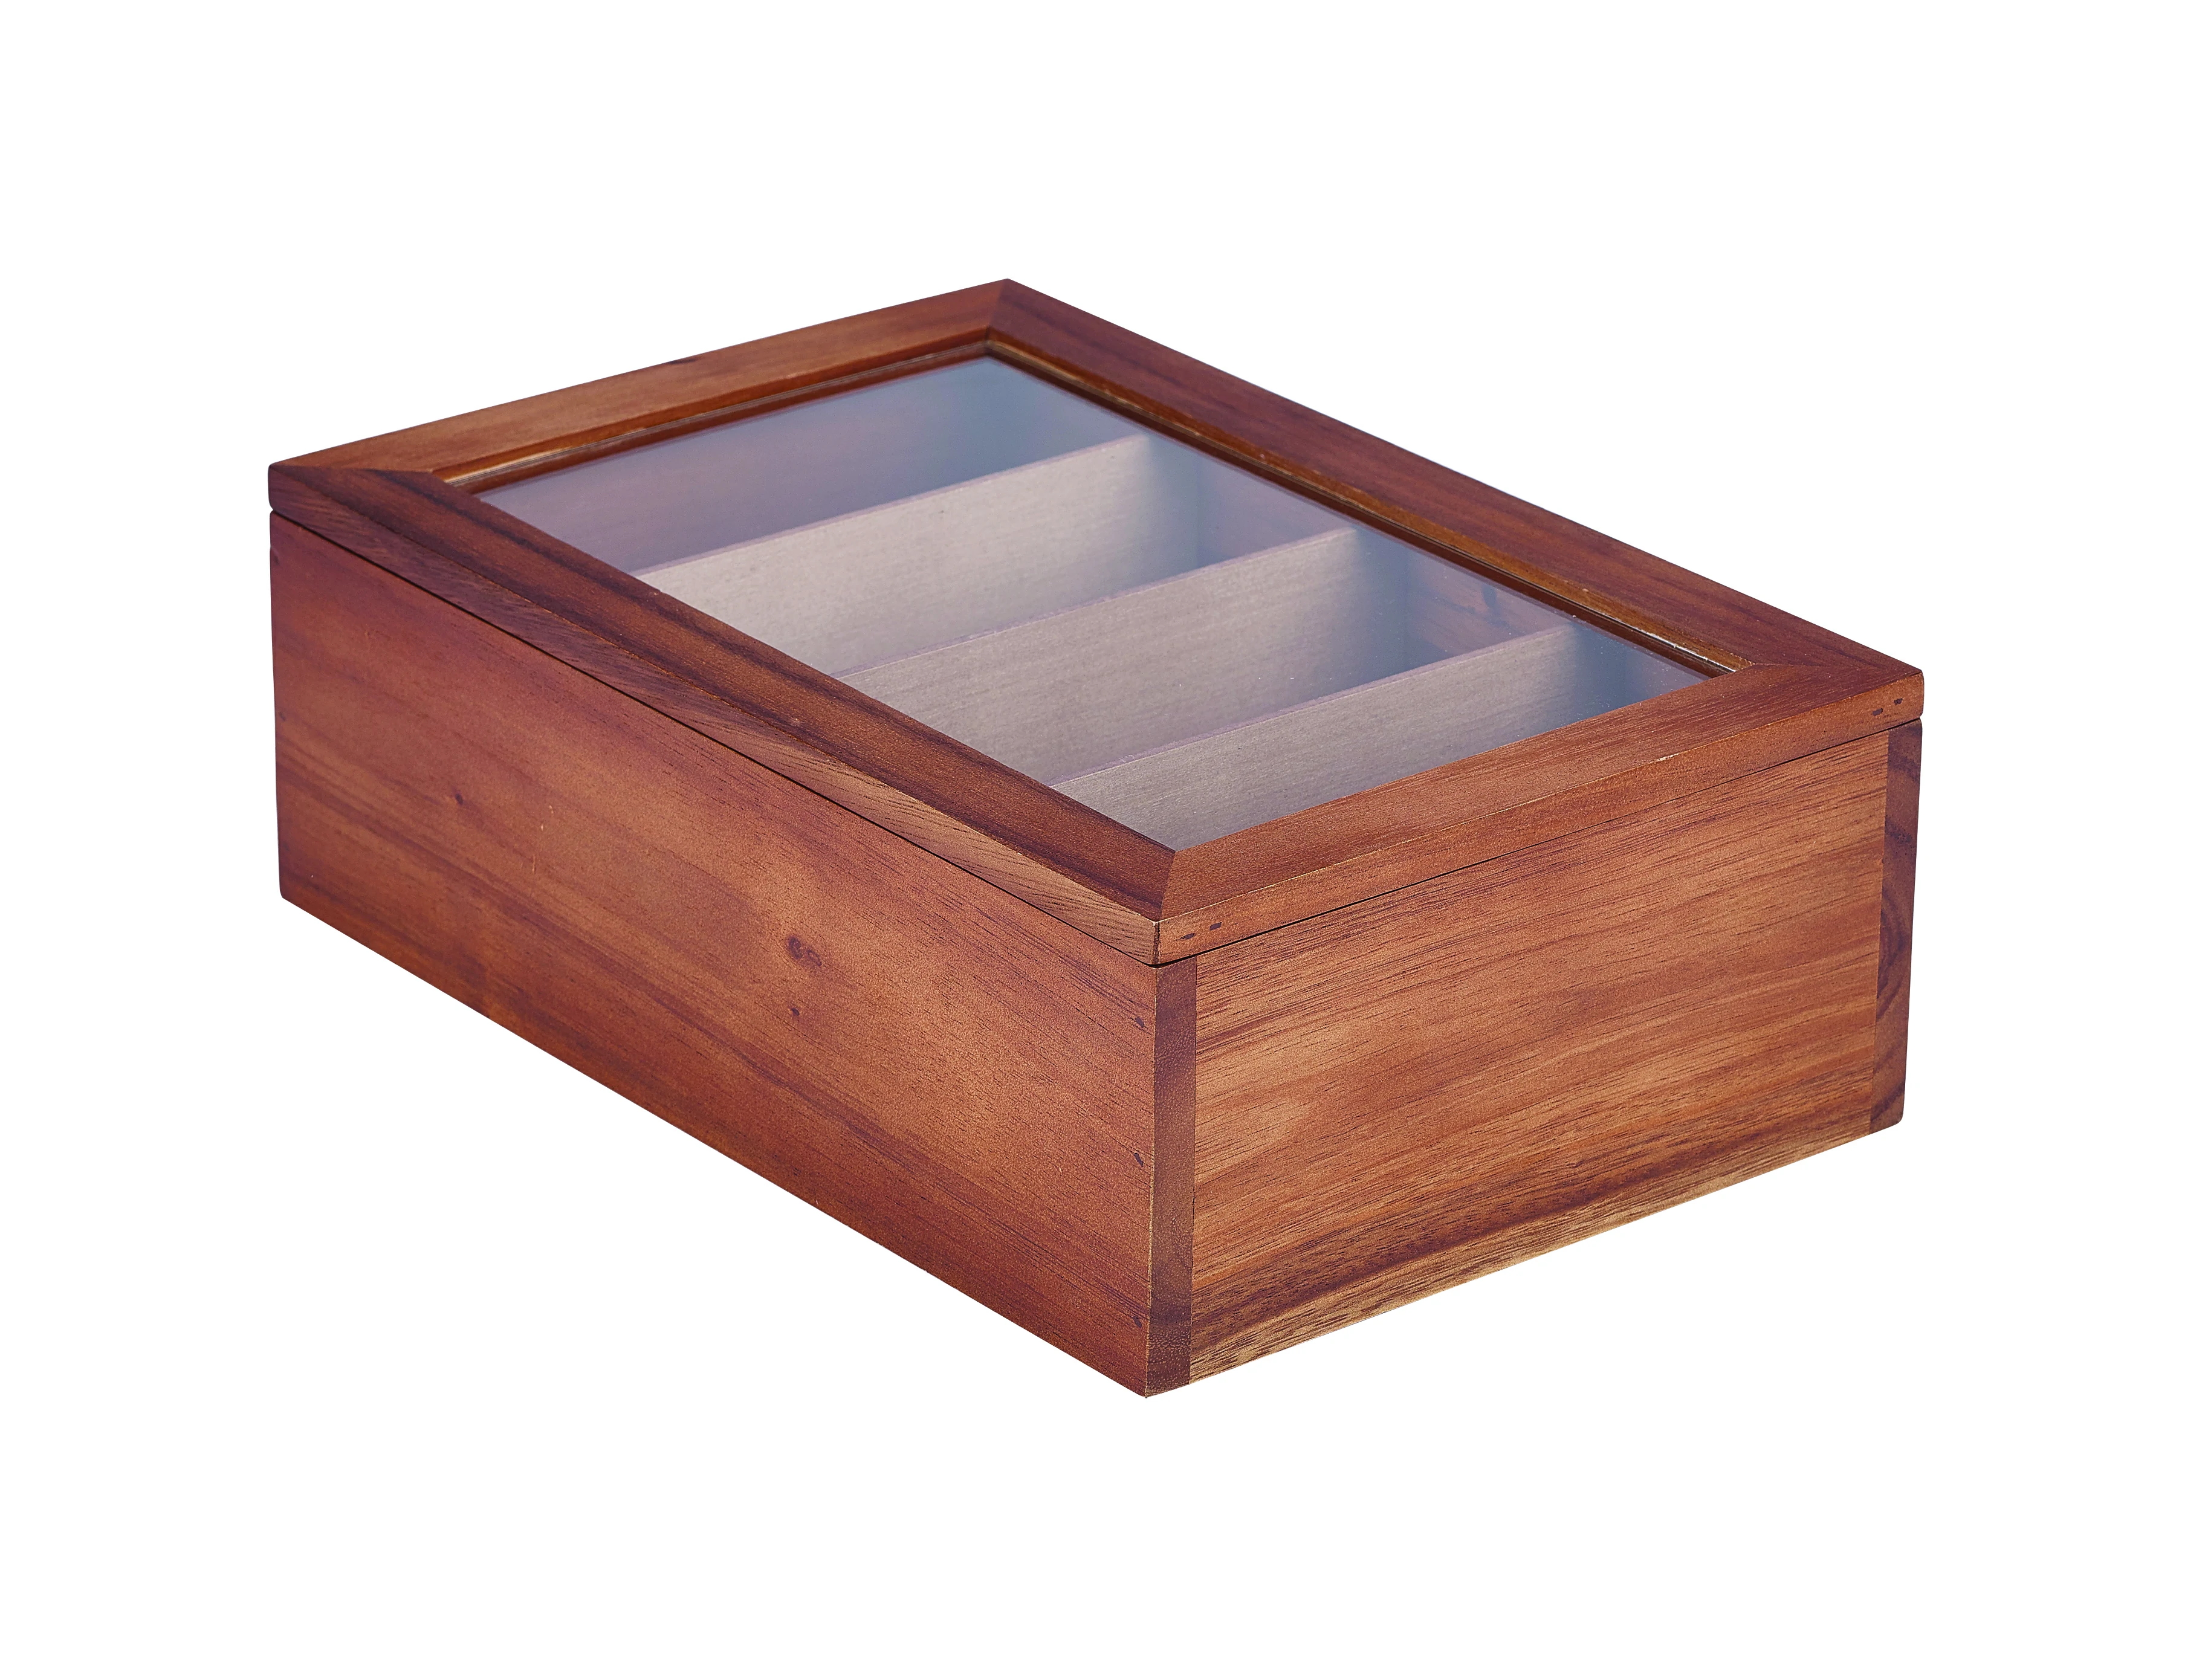 Acacia Wood Tea Box 30X20X10cm